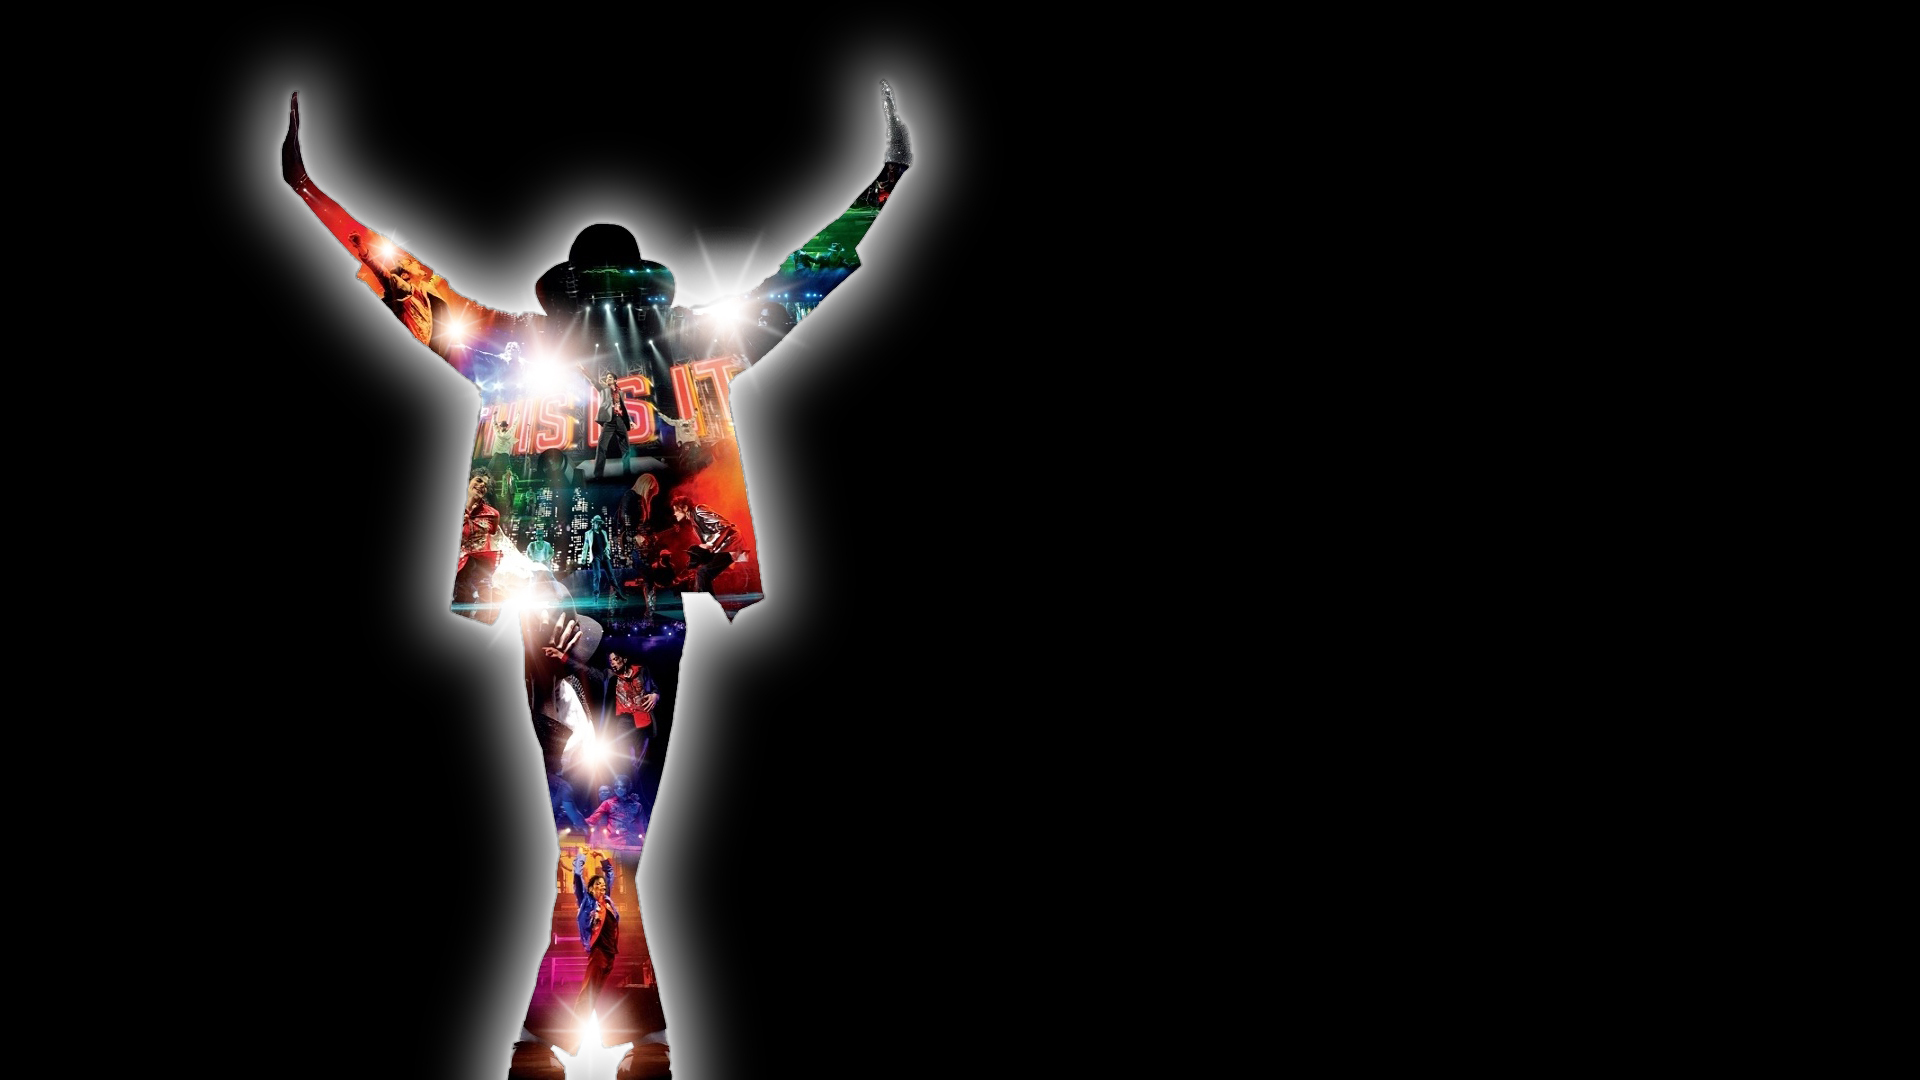 Michael Jackson Biography - Biography